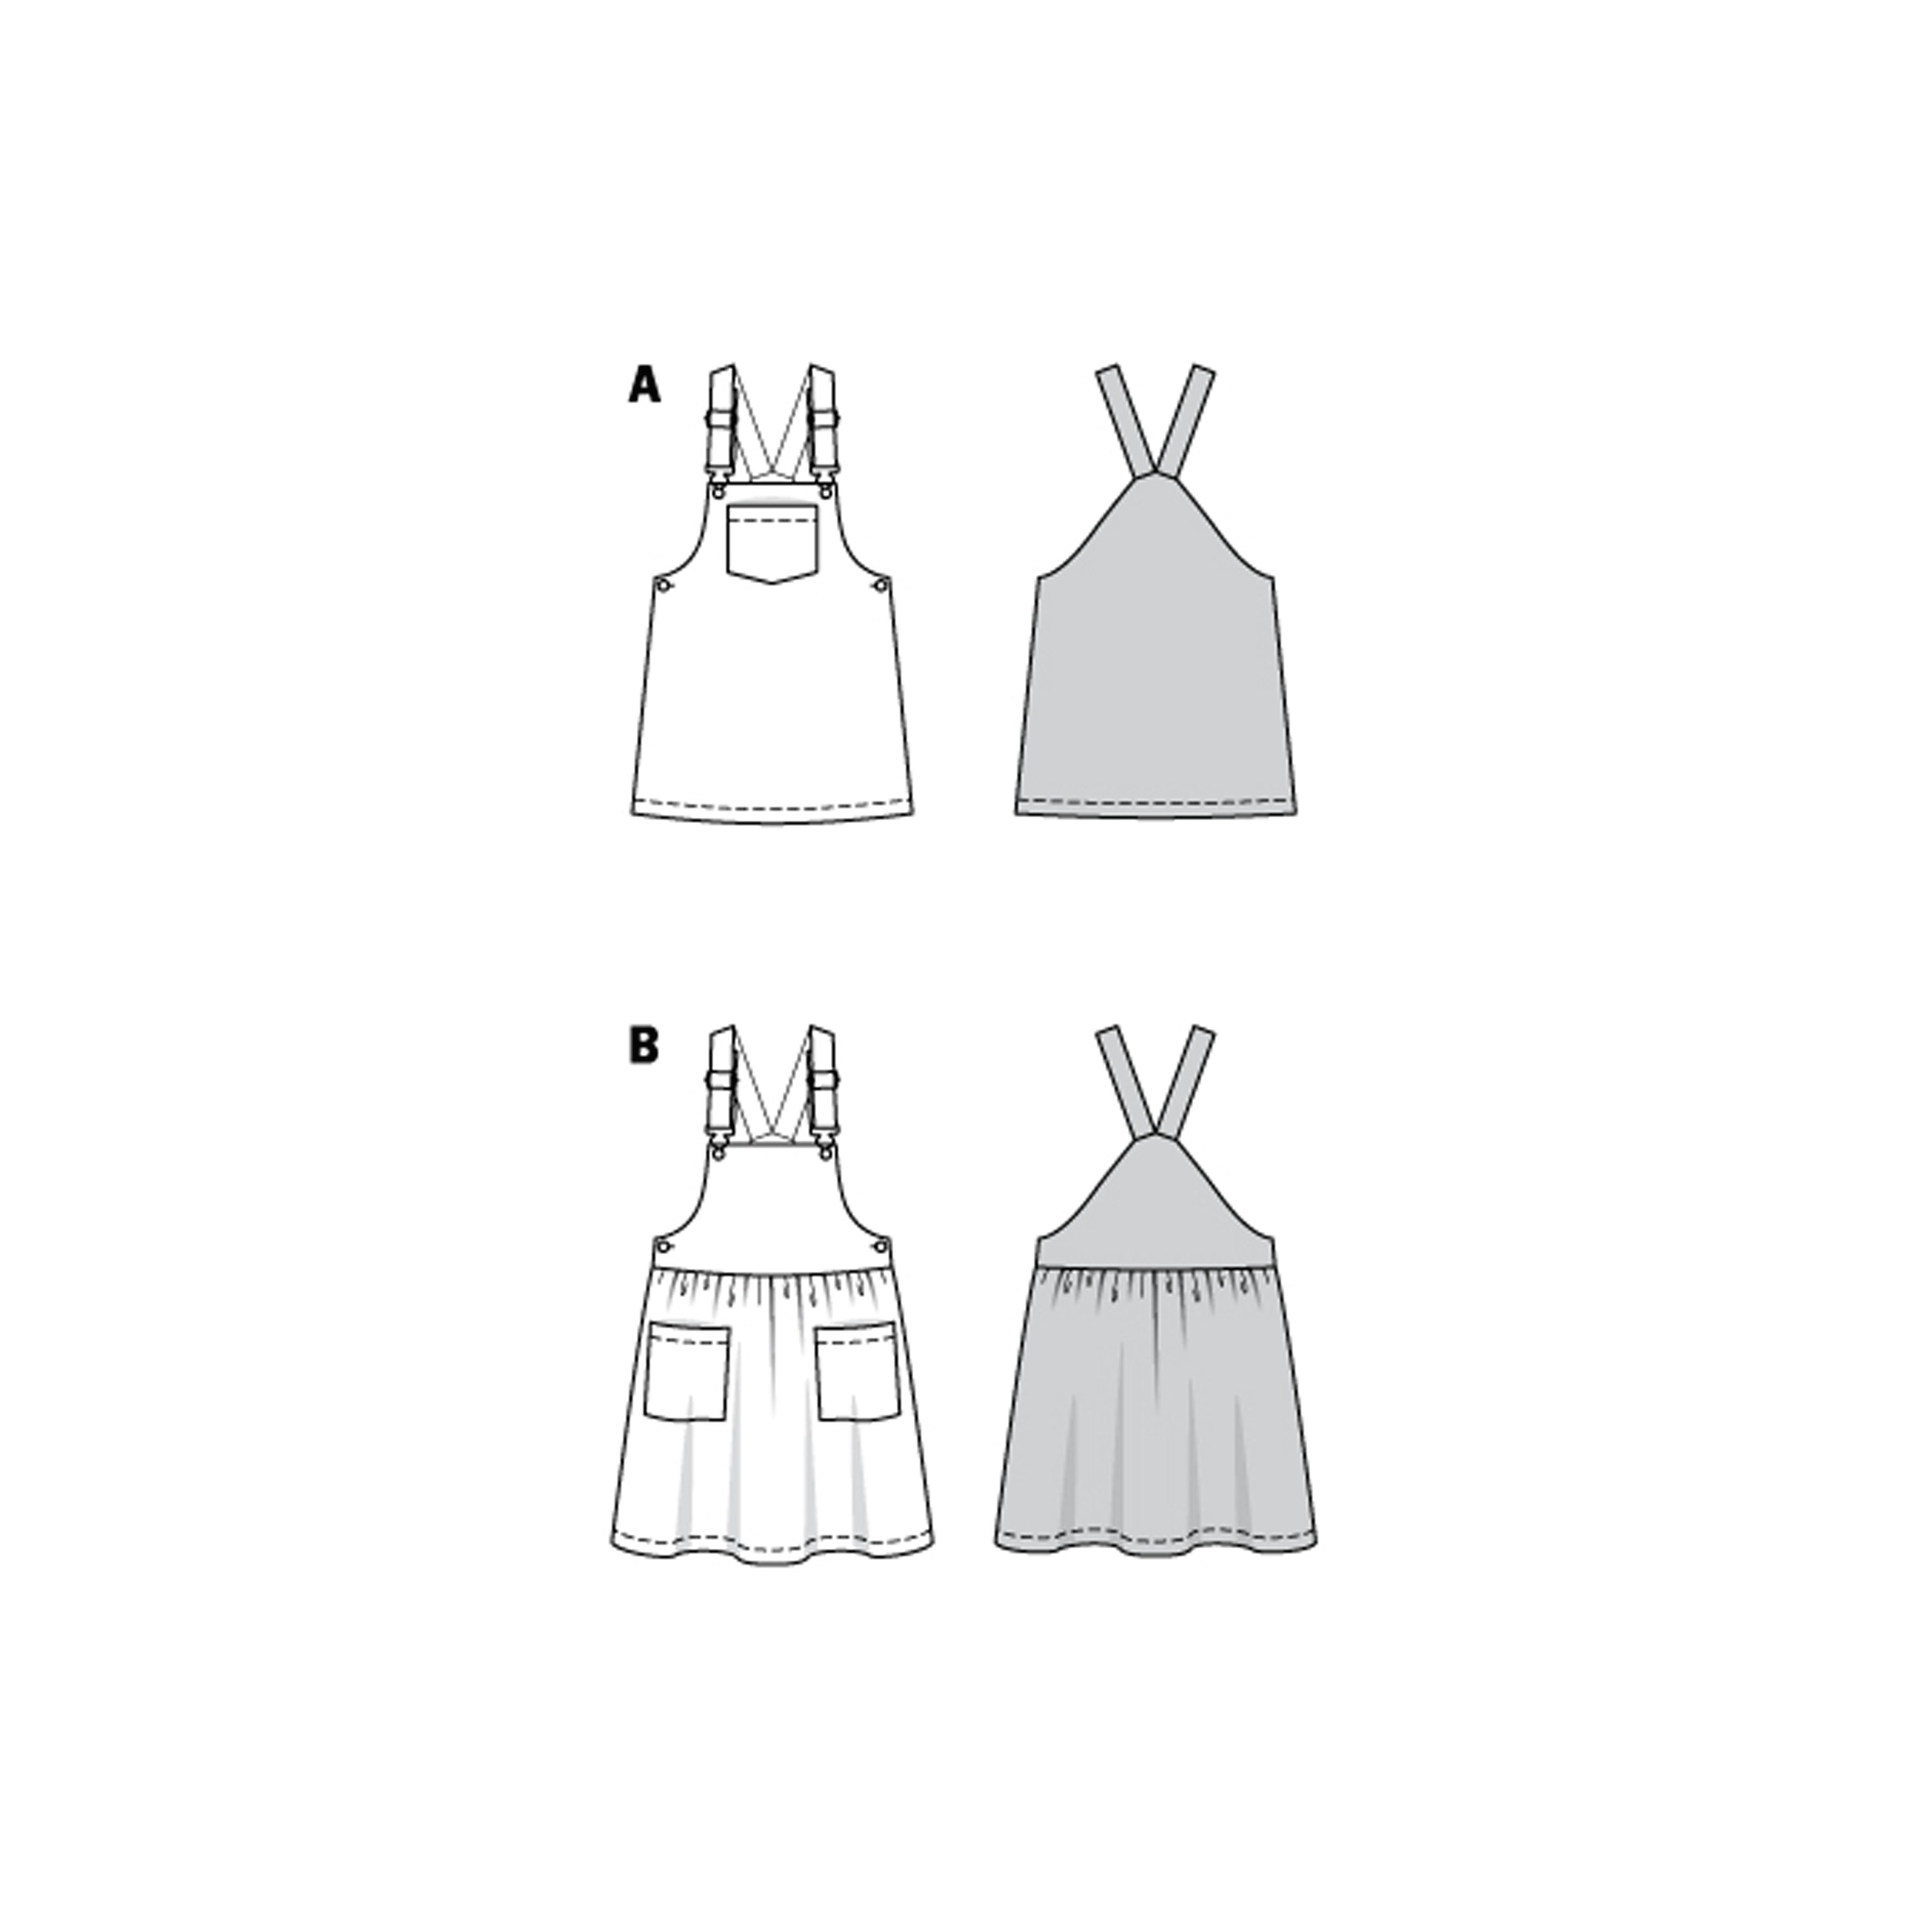 Burda Sewing Pattern 9287 Children's Bibbed skirt – Pinafore from Jaycotts Sewing Supplies